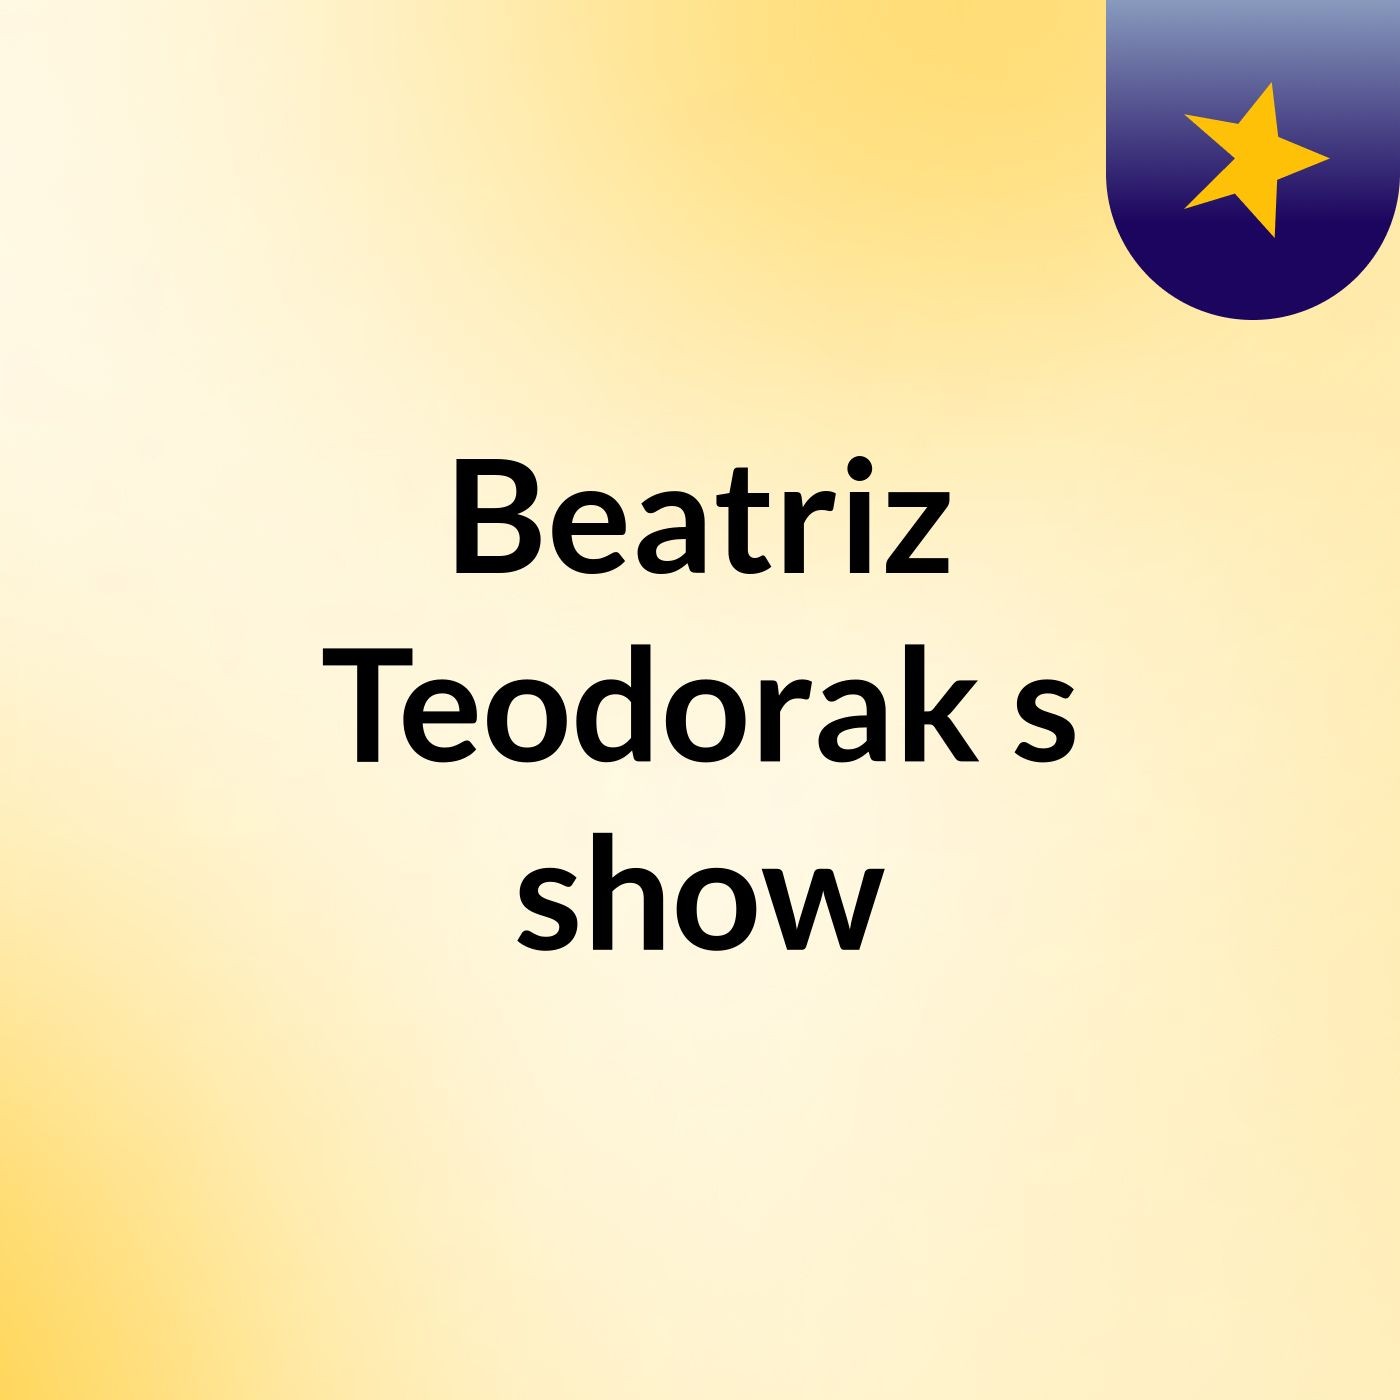 Beatriz Teodorak's show